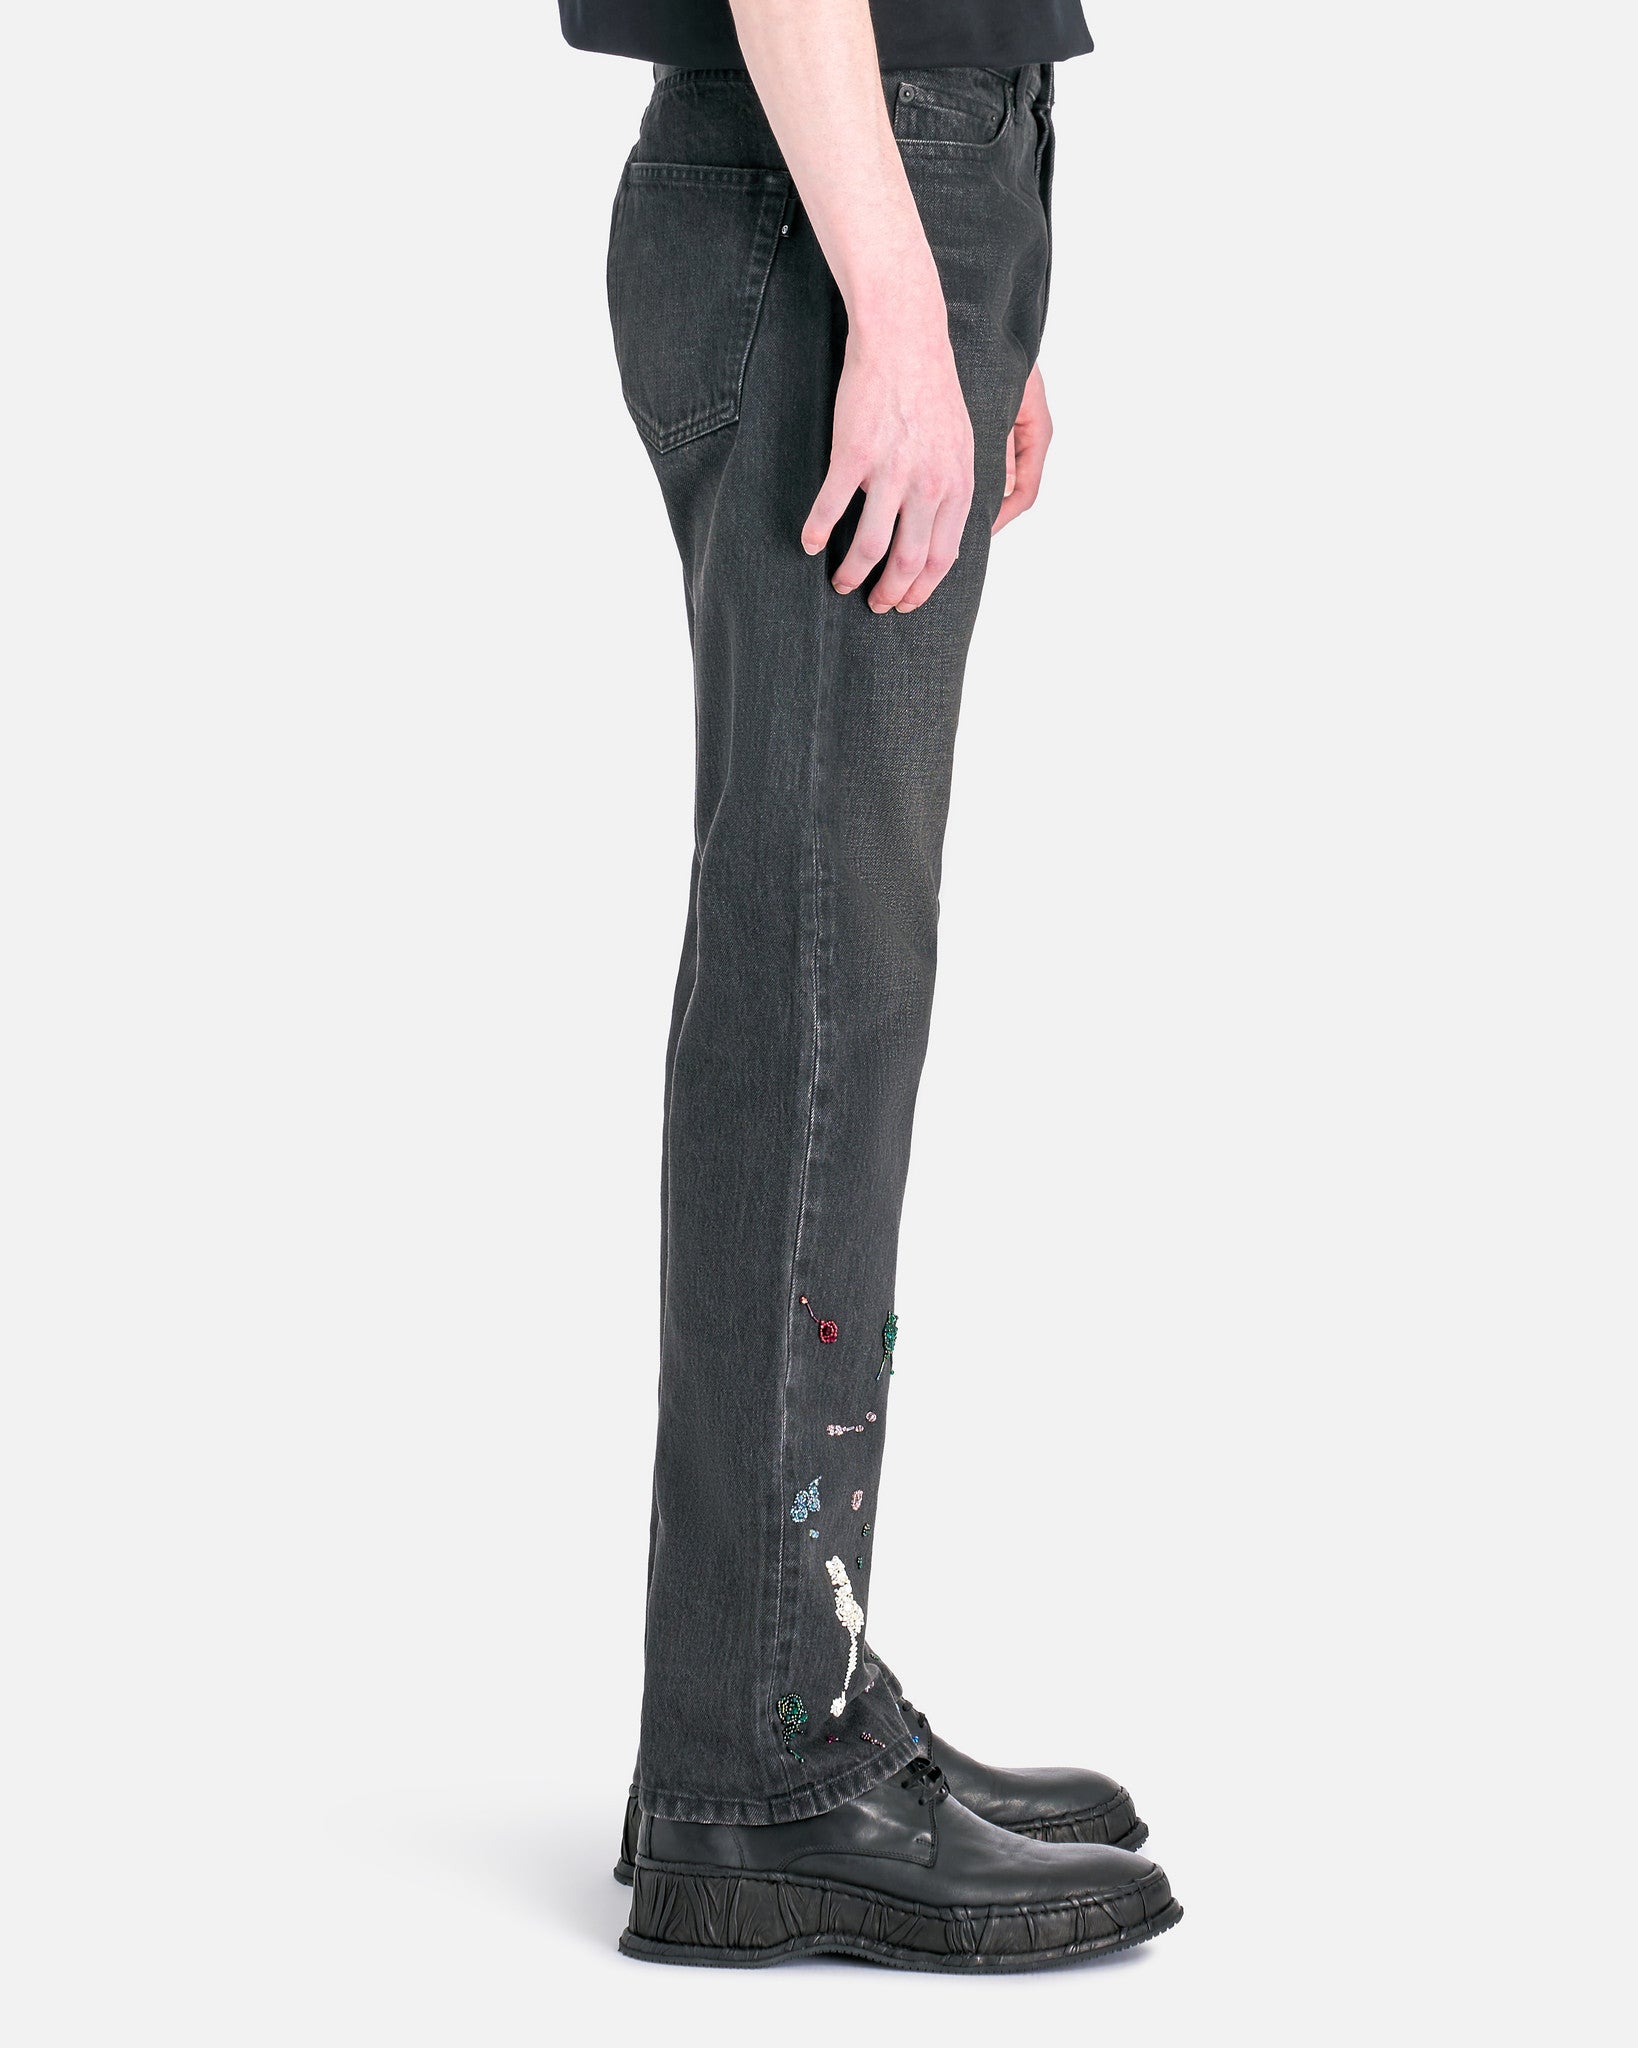 UNDERCOVER Men's Jeans Embroidered Splatter Jeans in Black